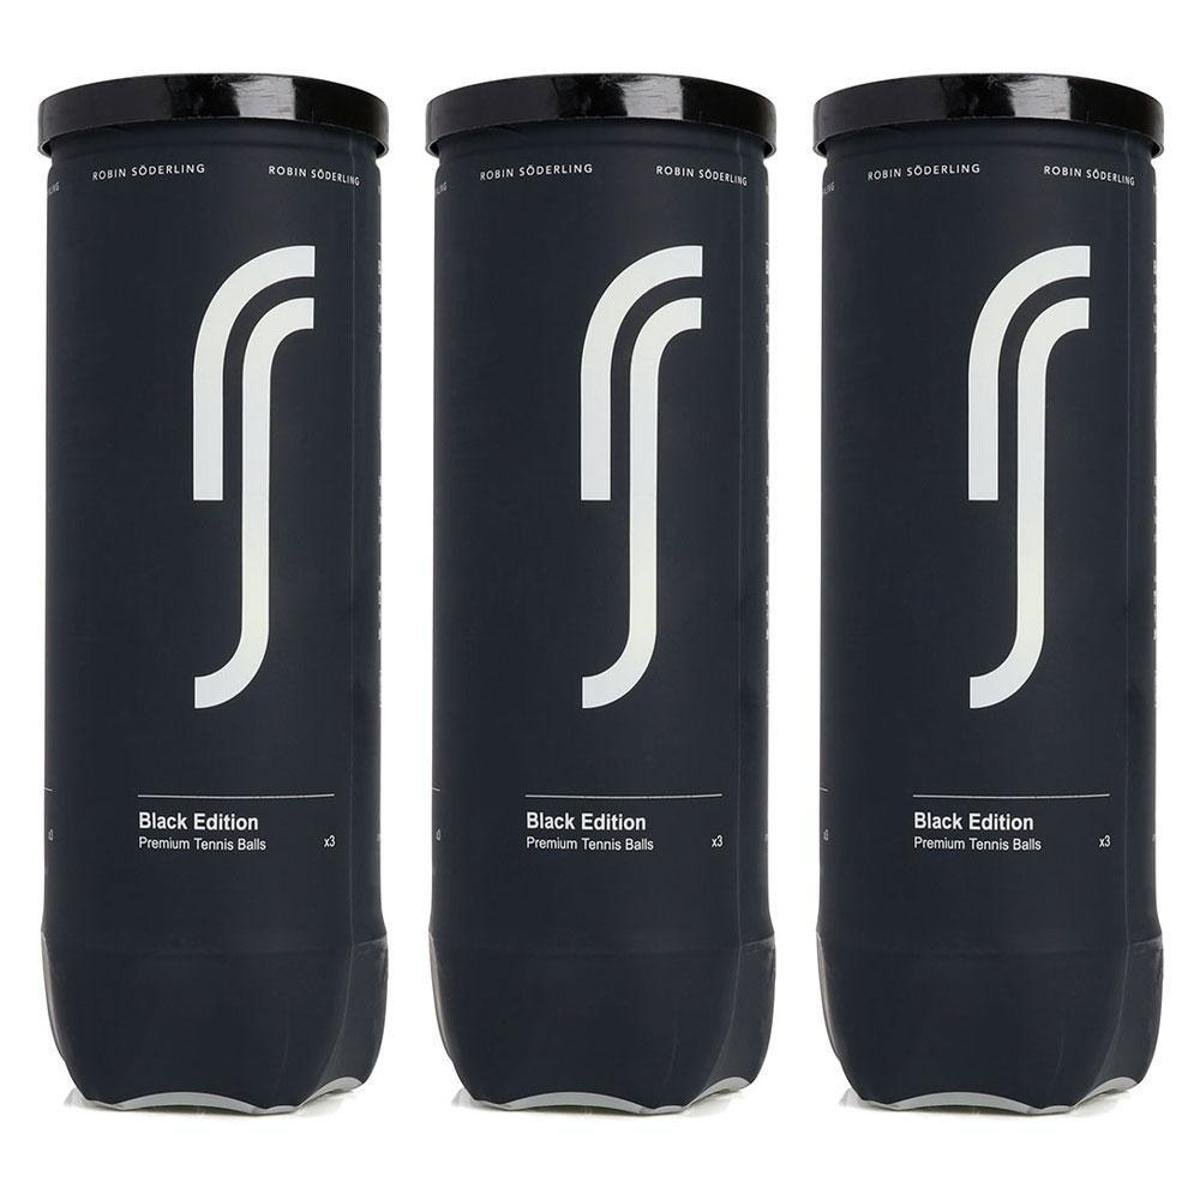 Bola de Tênis Robin Söderling Black Edition Pack com 3 tubos